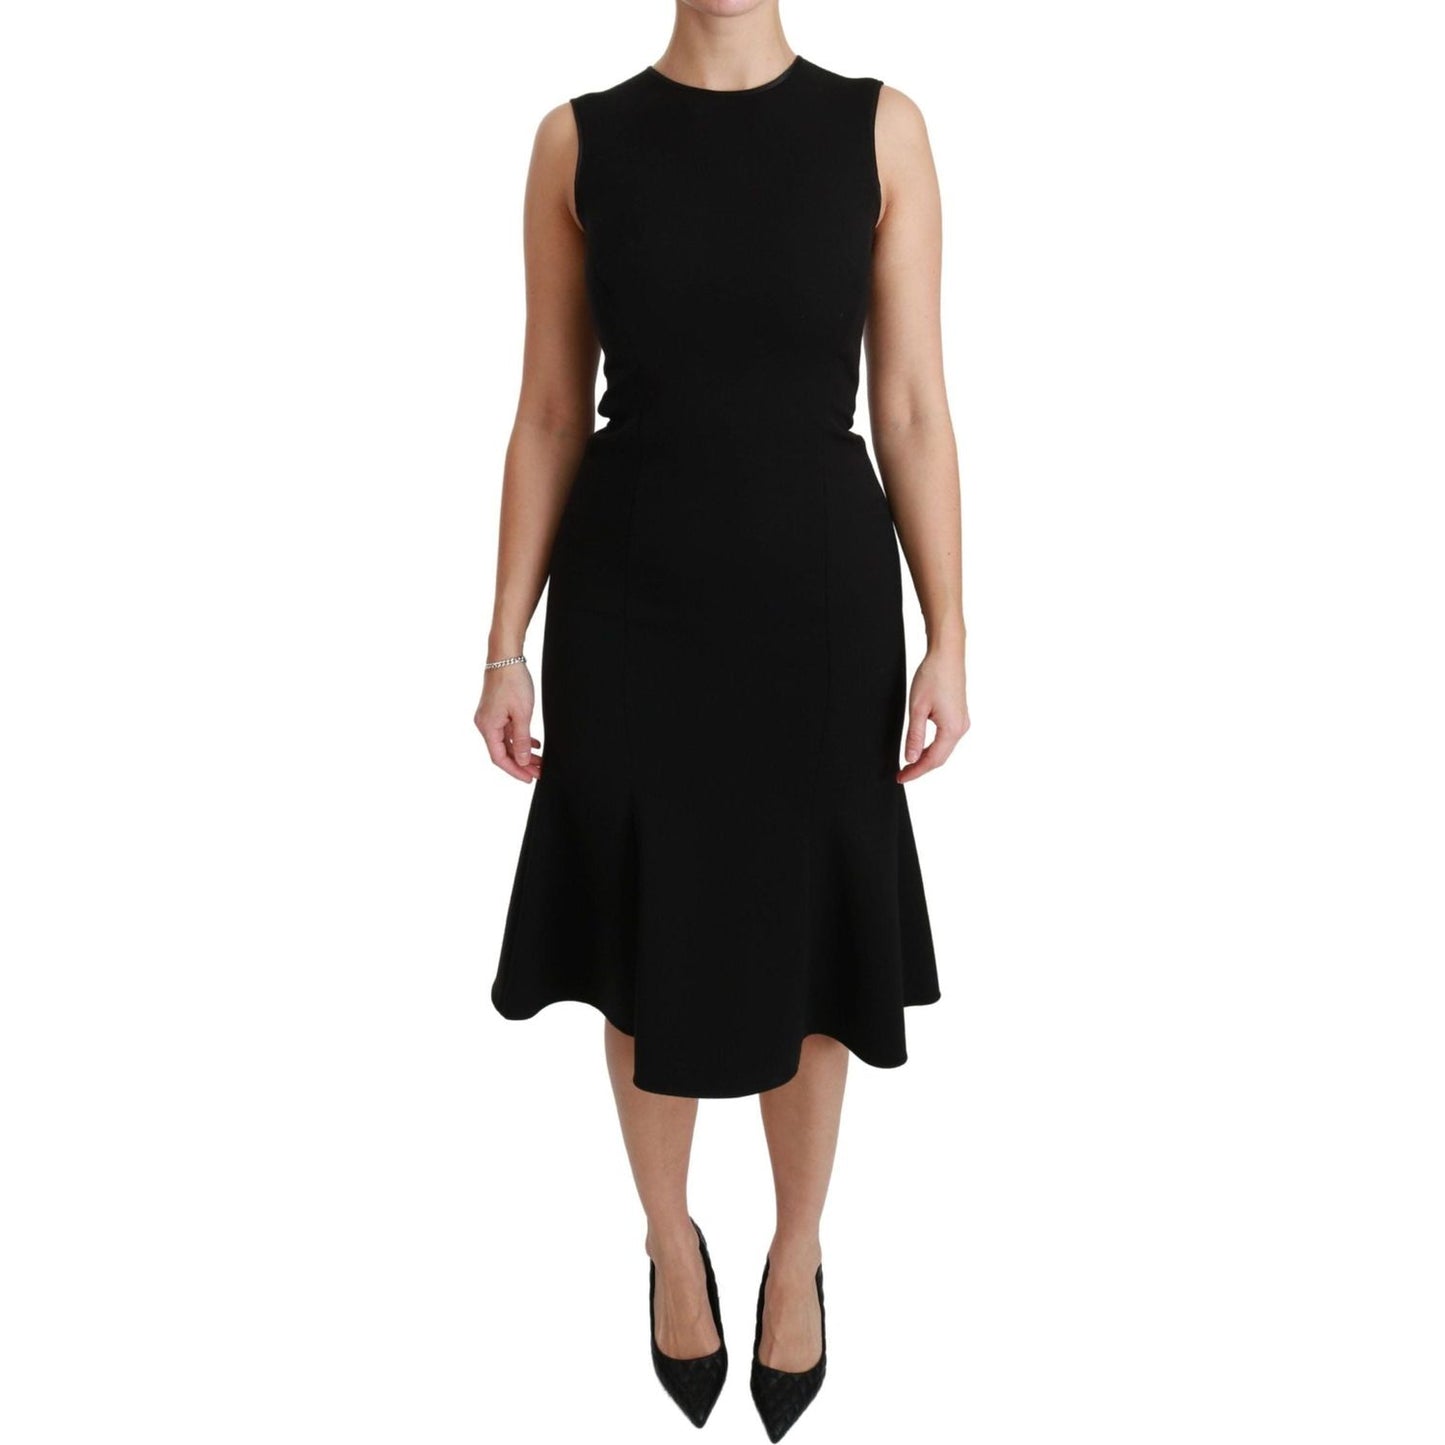 Dolce & Gabbana Elegant Black Fit Flare Wool Blend Dress black-fit-flare-wool-stretch-sheath-dress WOMAN DRESSES IMG_6964-scaled-45d733f8-0f0.jpg